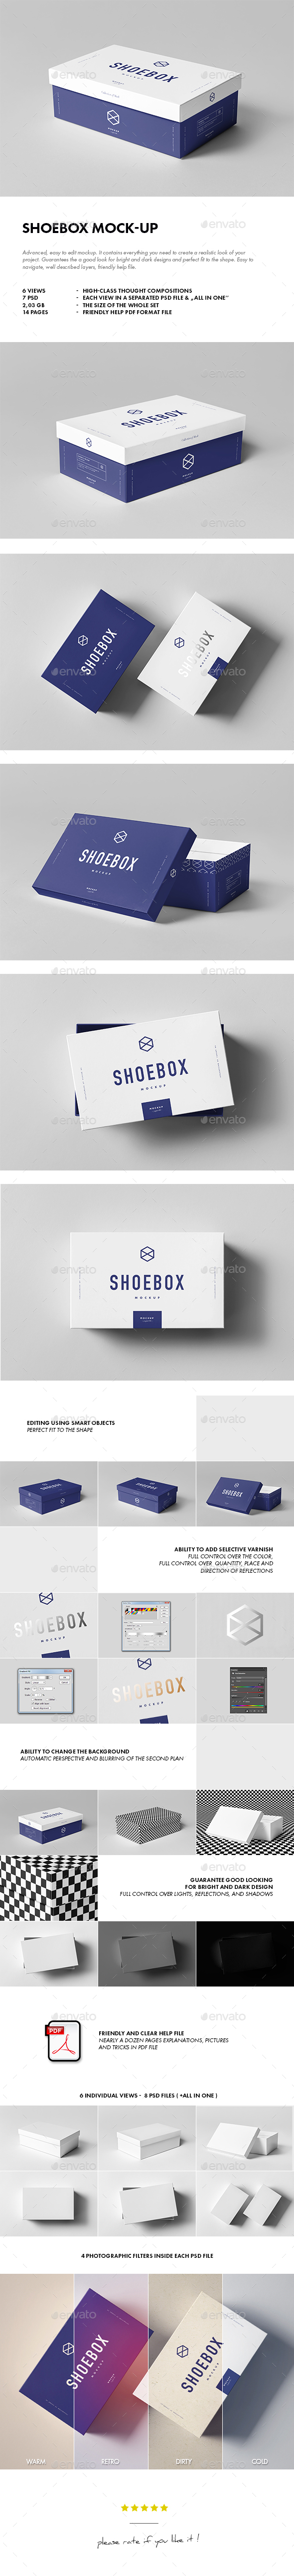 Shoe Box Mock-up